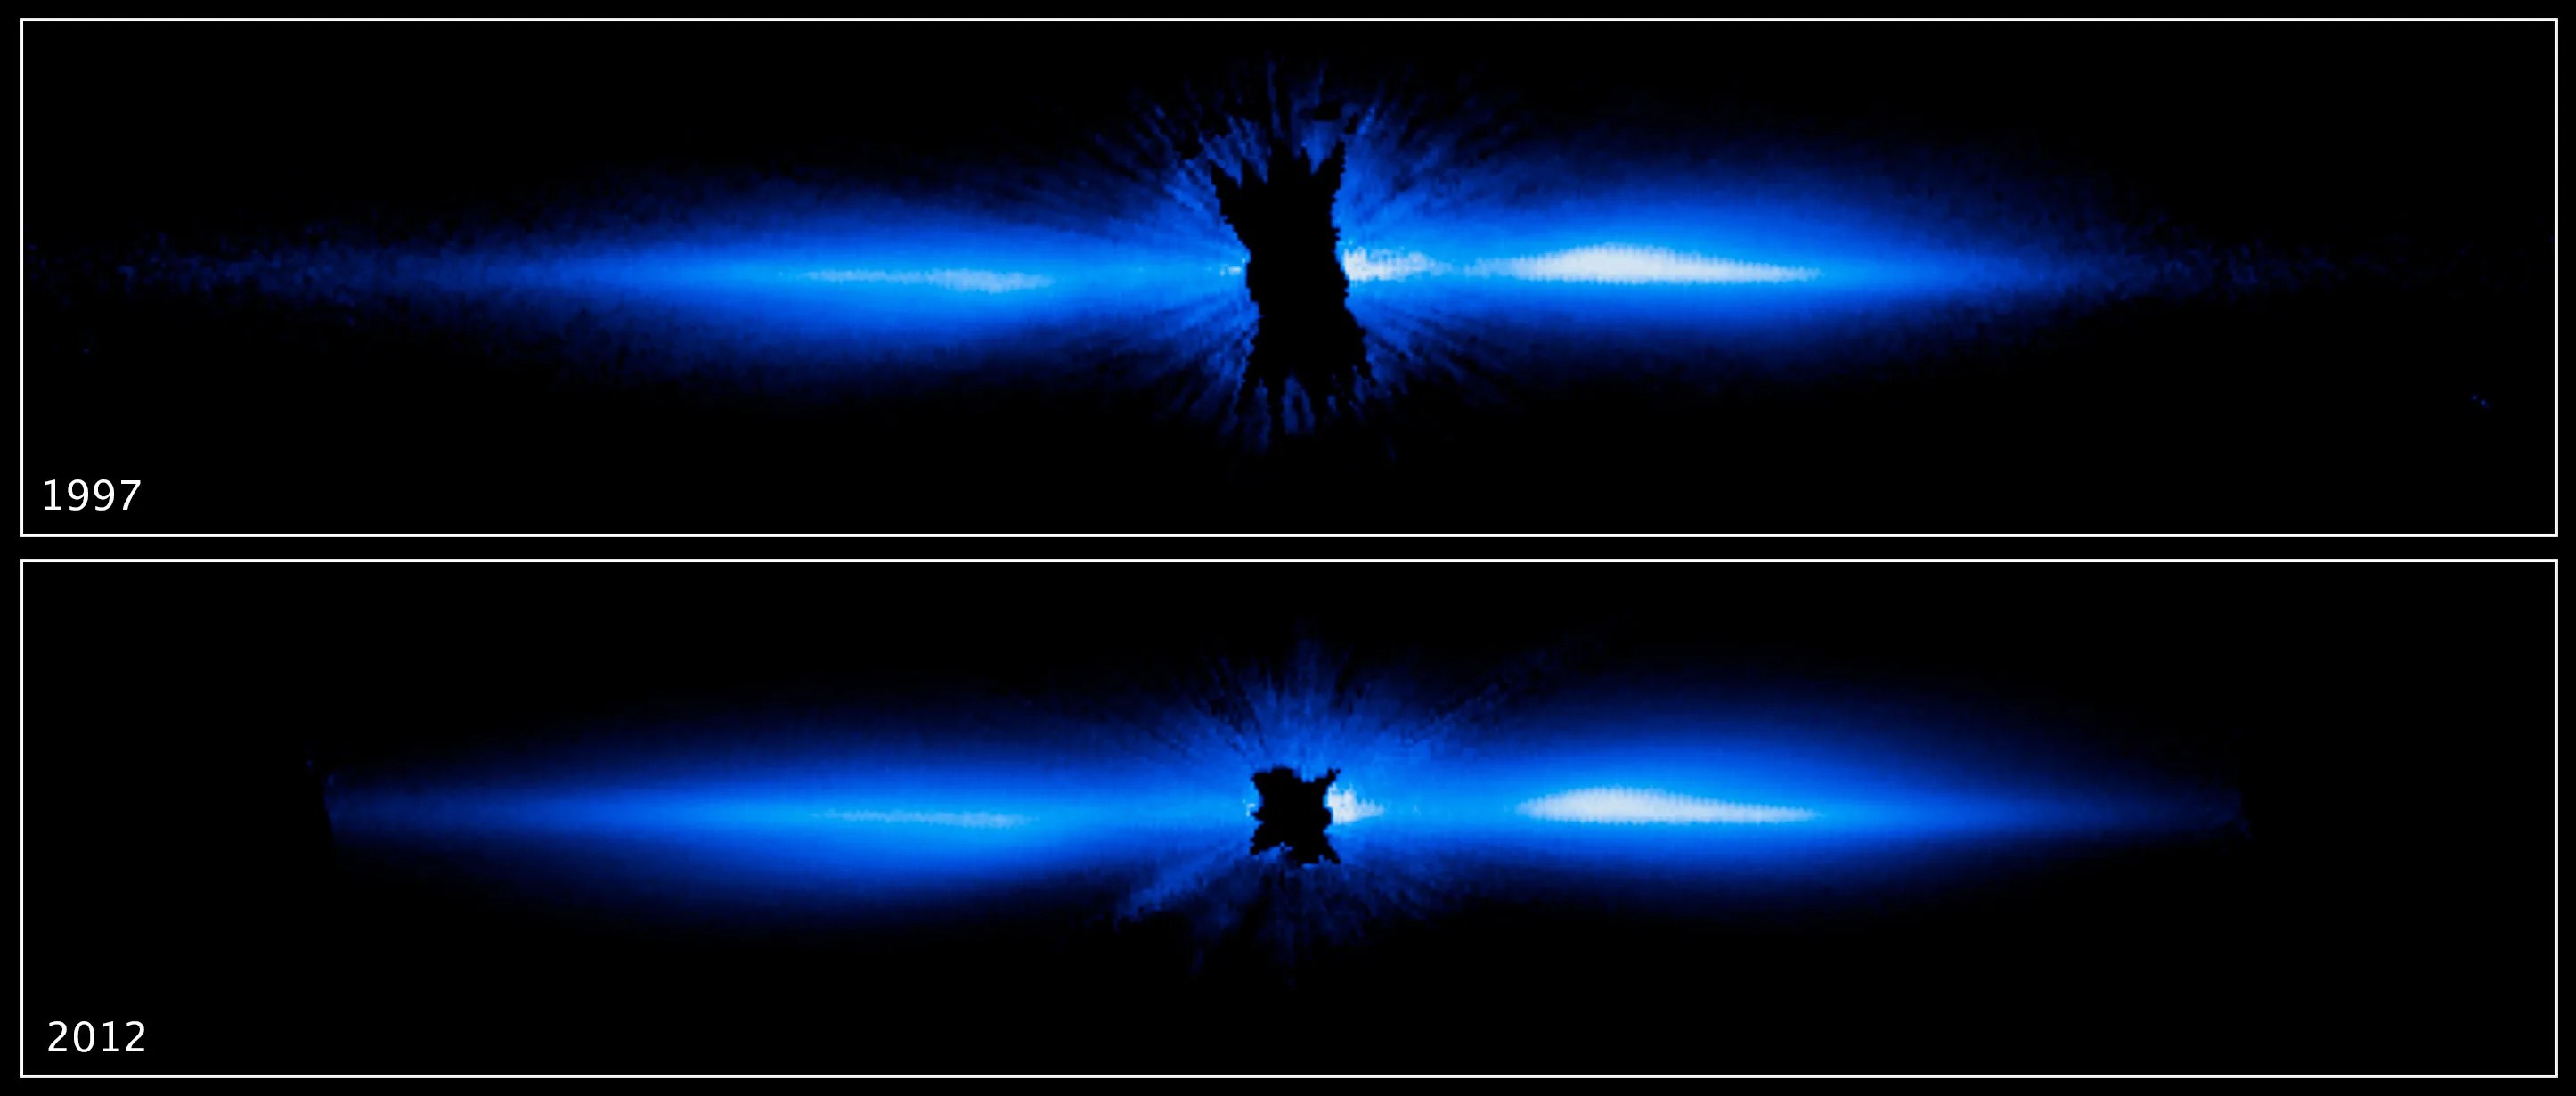 Hubble observations of Beta Pictoris